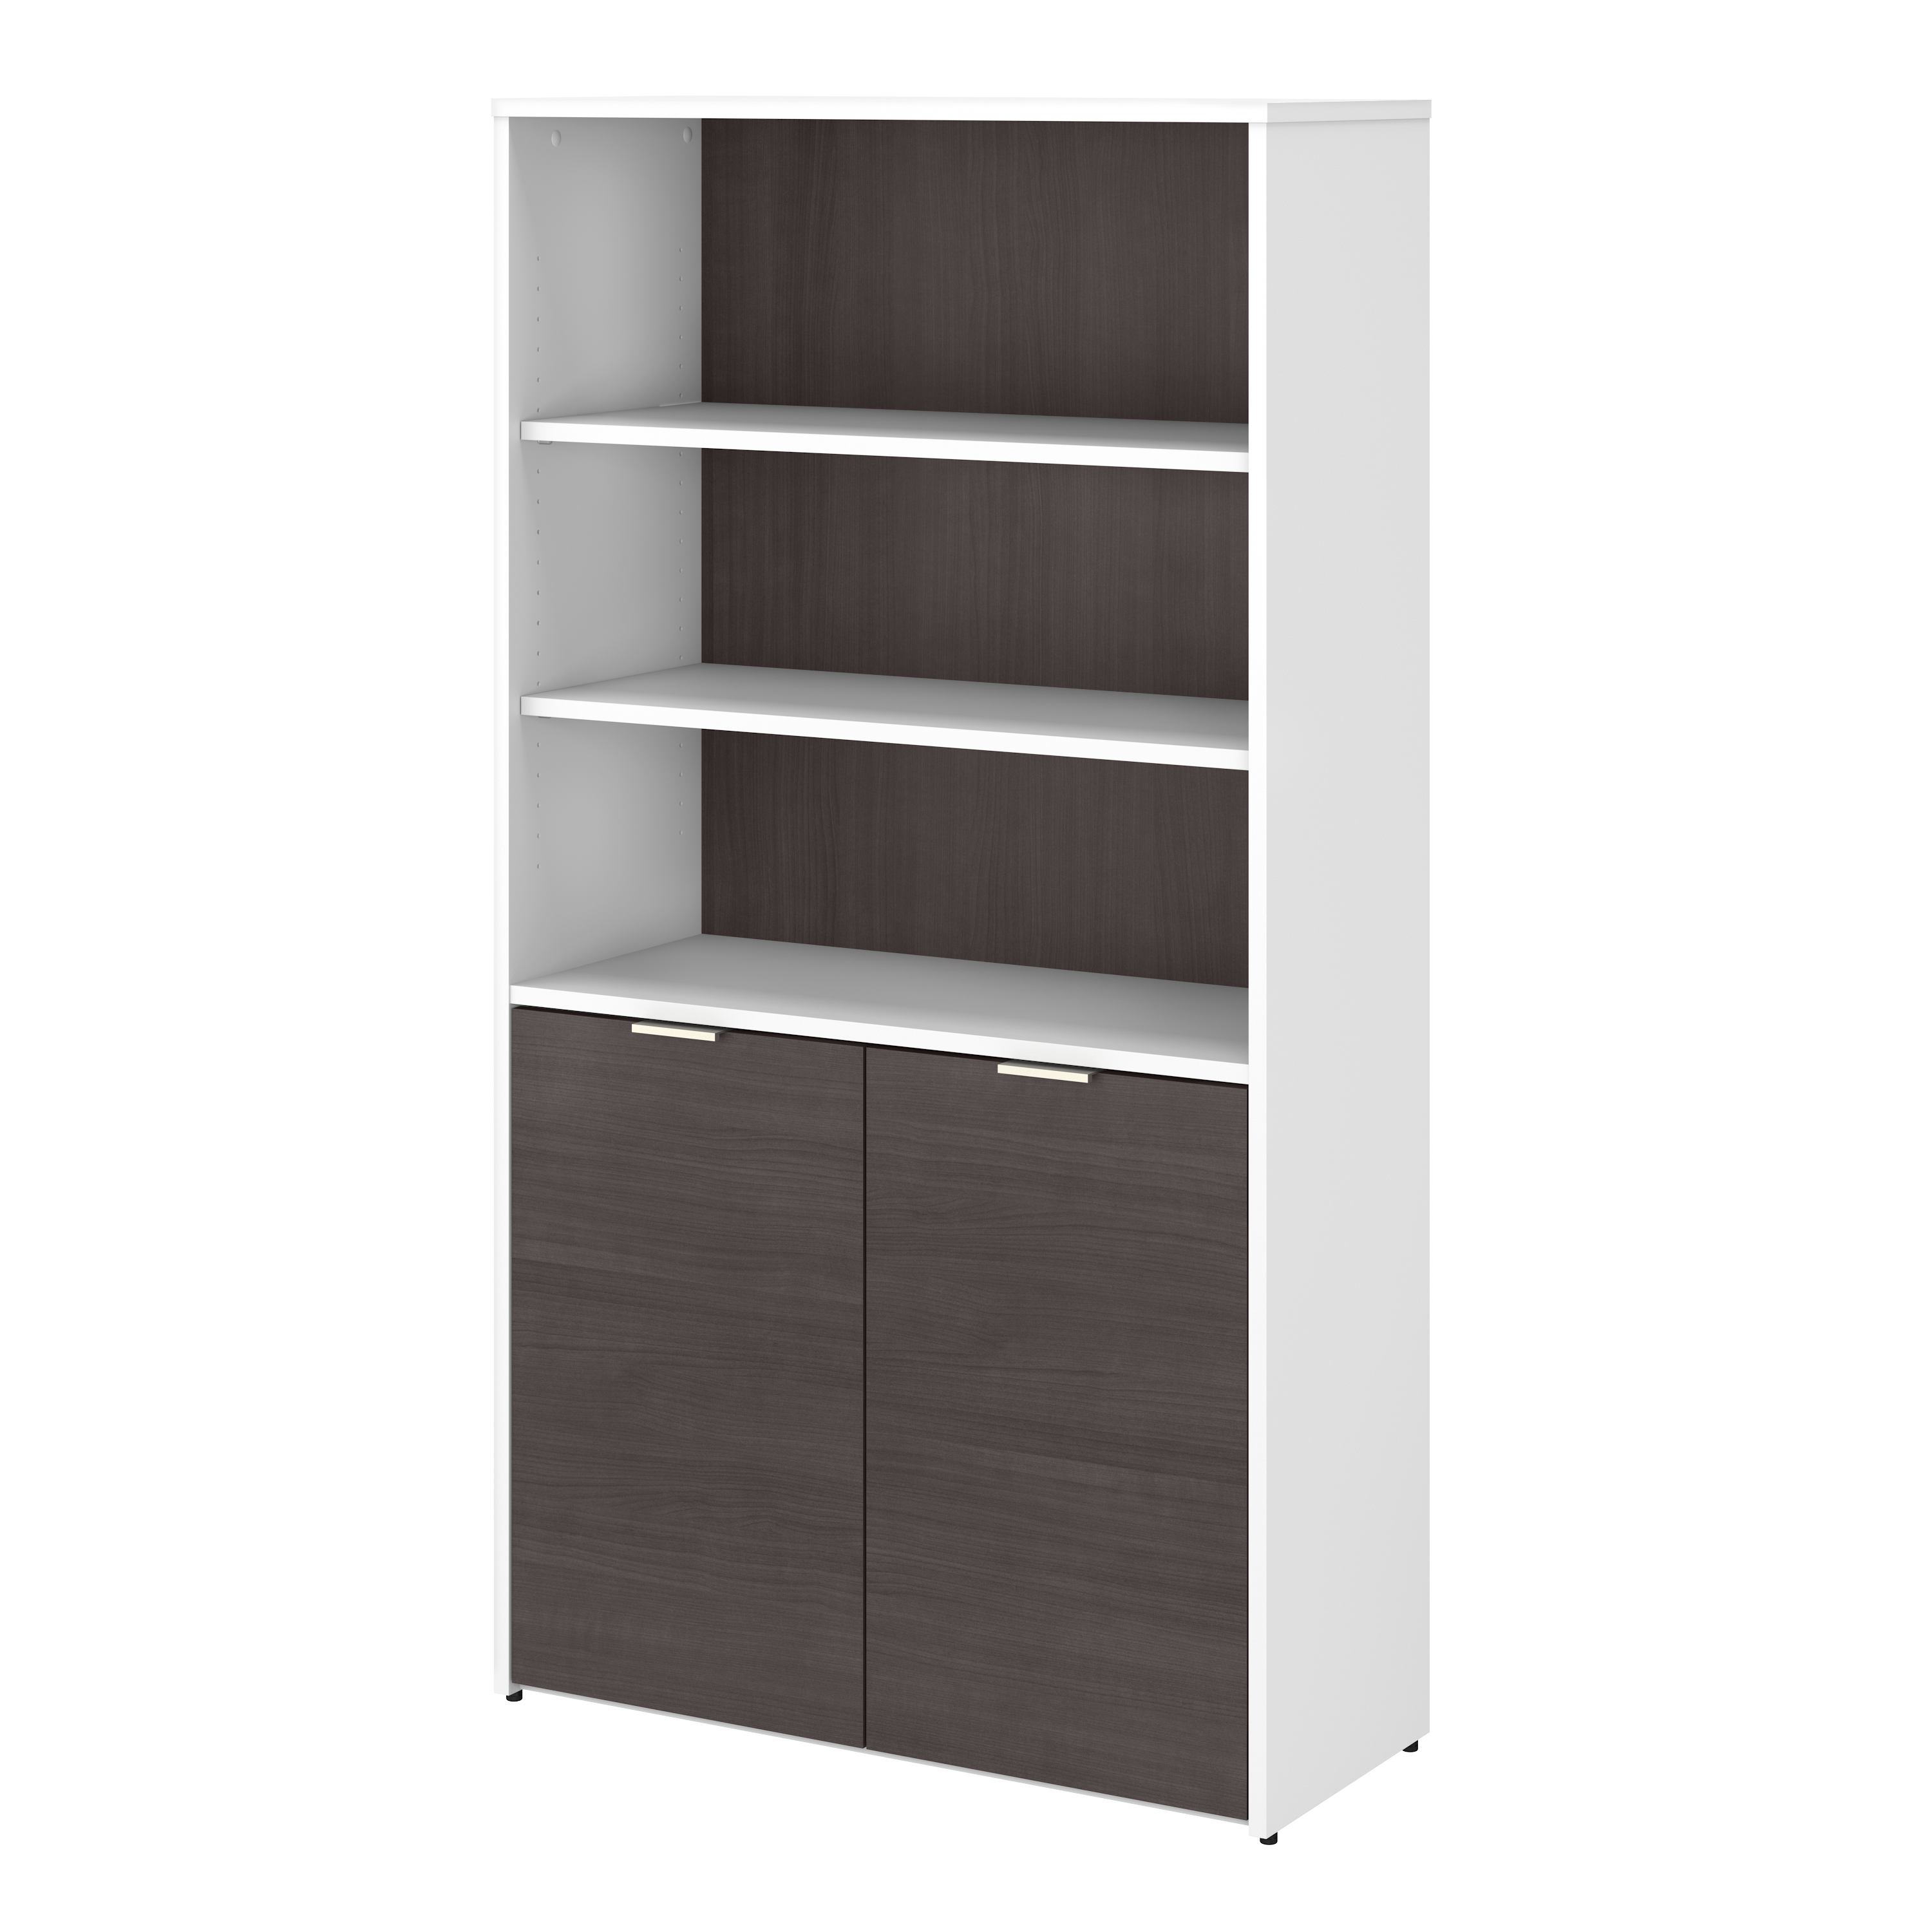 Shop Bush Business Furniture Jamestown 5 Shelf Bookcase with Doors 02 JTB136SGWH #color_storm gray/white